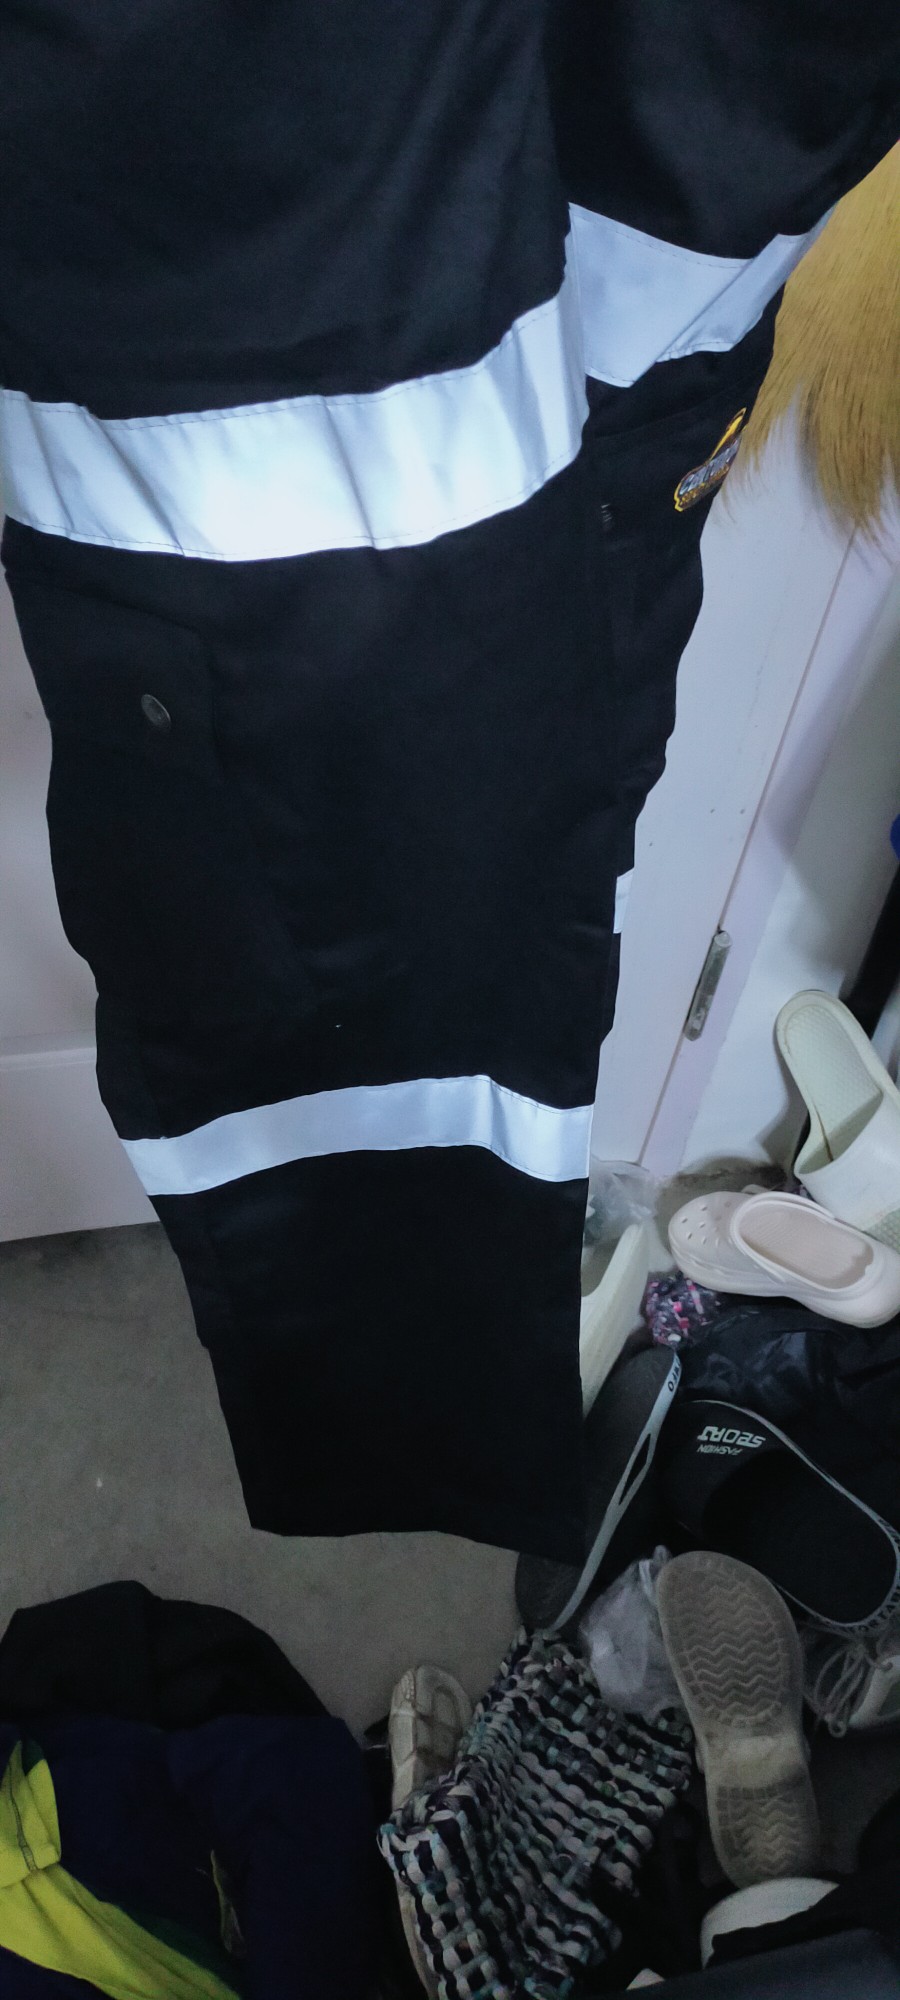 THAMUZ, 6 Pocket reflectorized safety pants – Cutton Garments